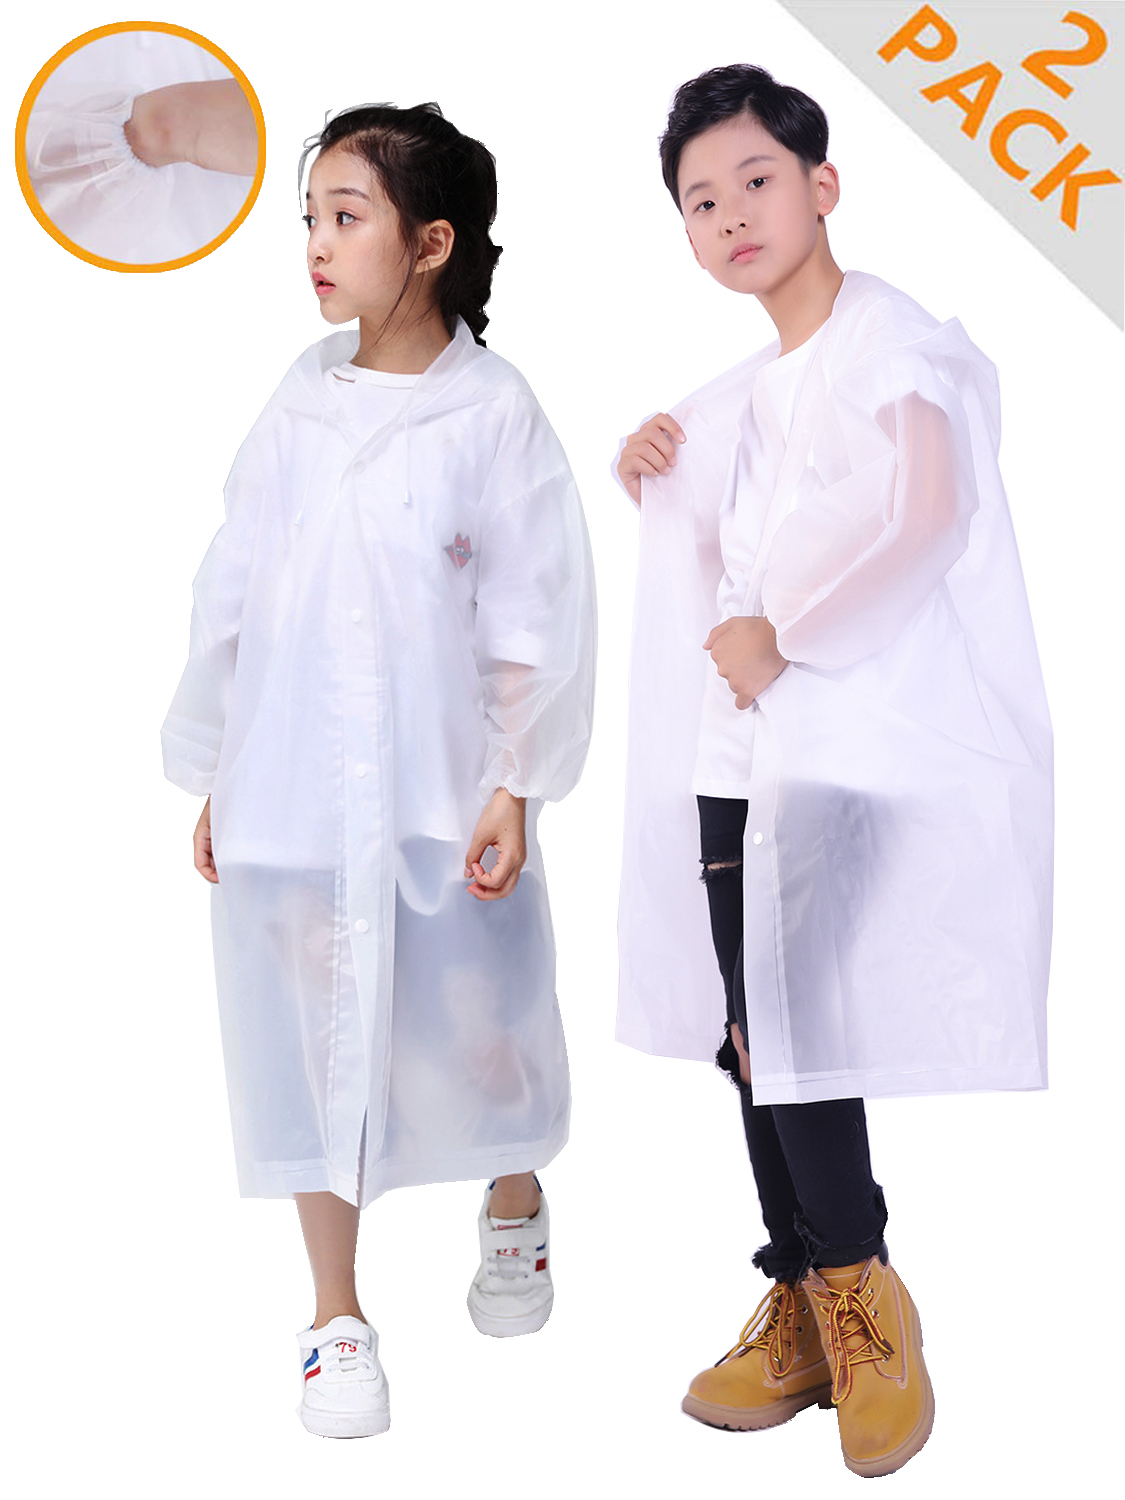 HLKZONE Rain Coats for Kids, [2 Pack] EVA Emergency Reusable Outwear Rain Coat Rain Poncho Jacket